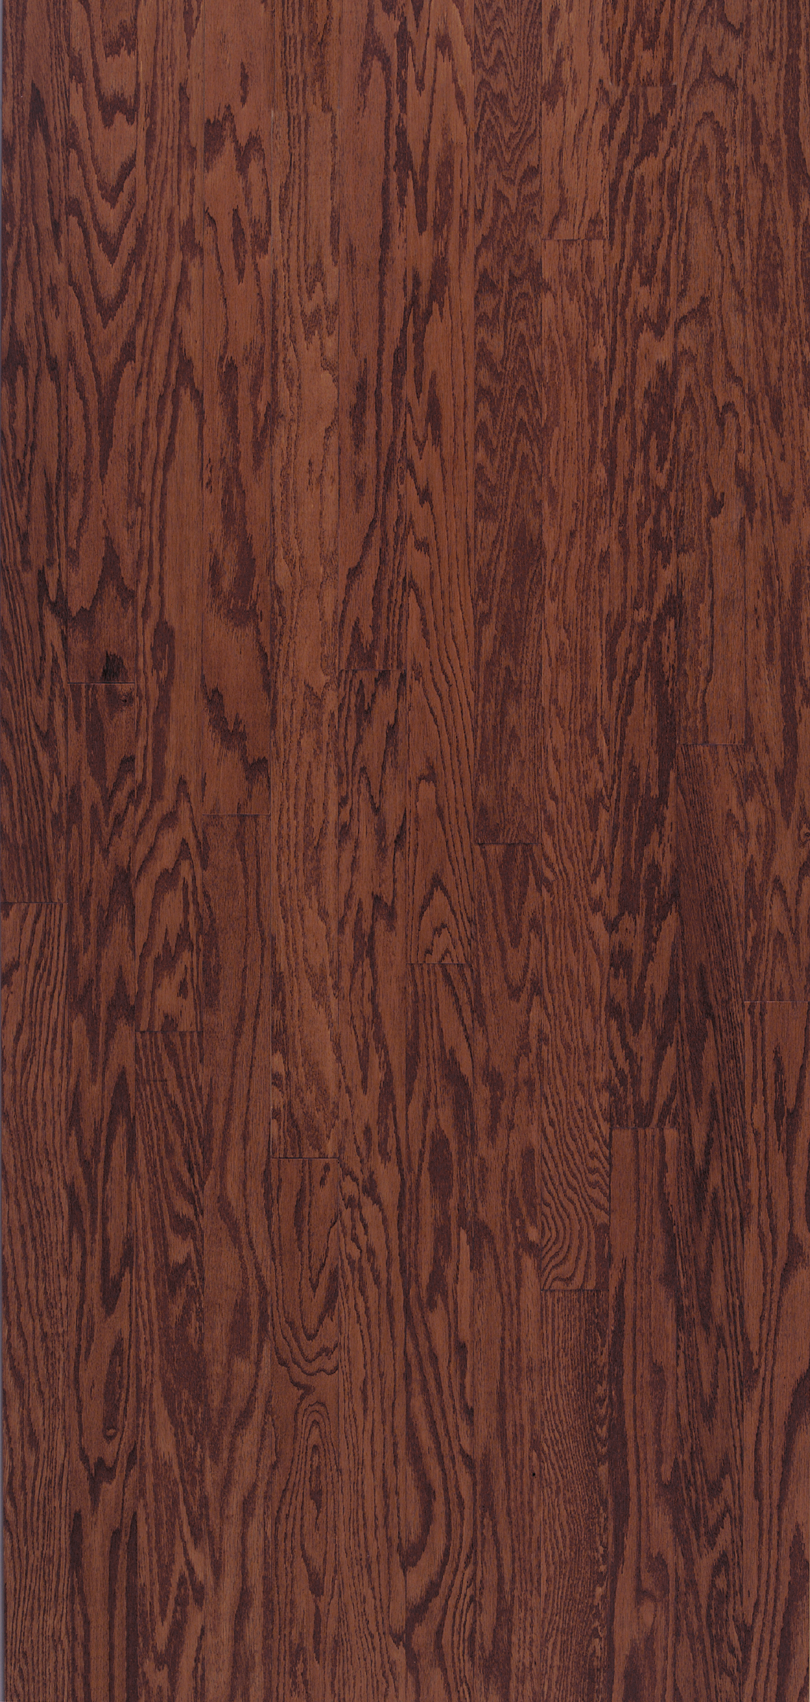 Cherry Oak 3" - Turlington Lock&Fold Collection - Engineered Hardwood Flooring by Bruce